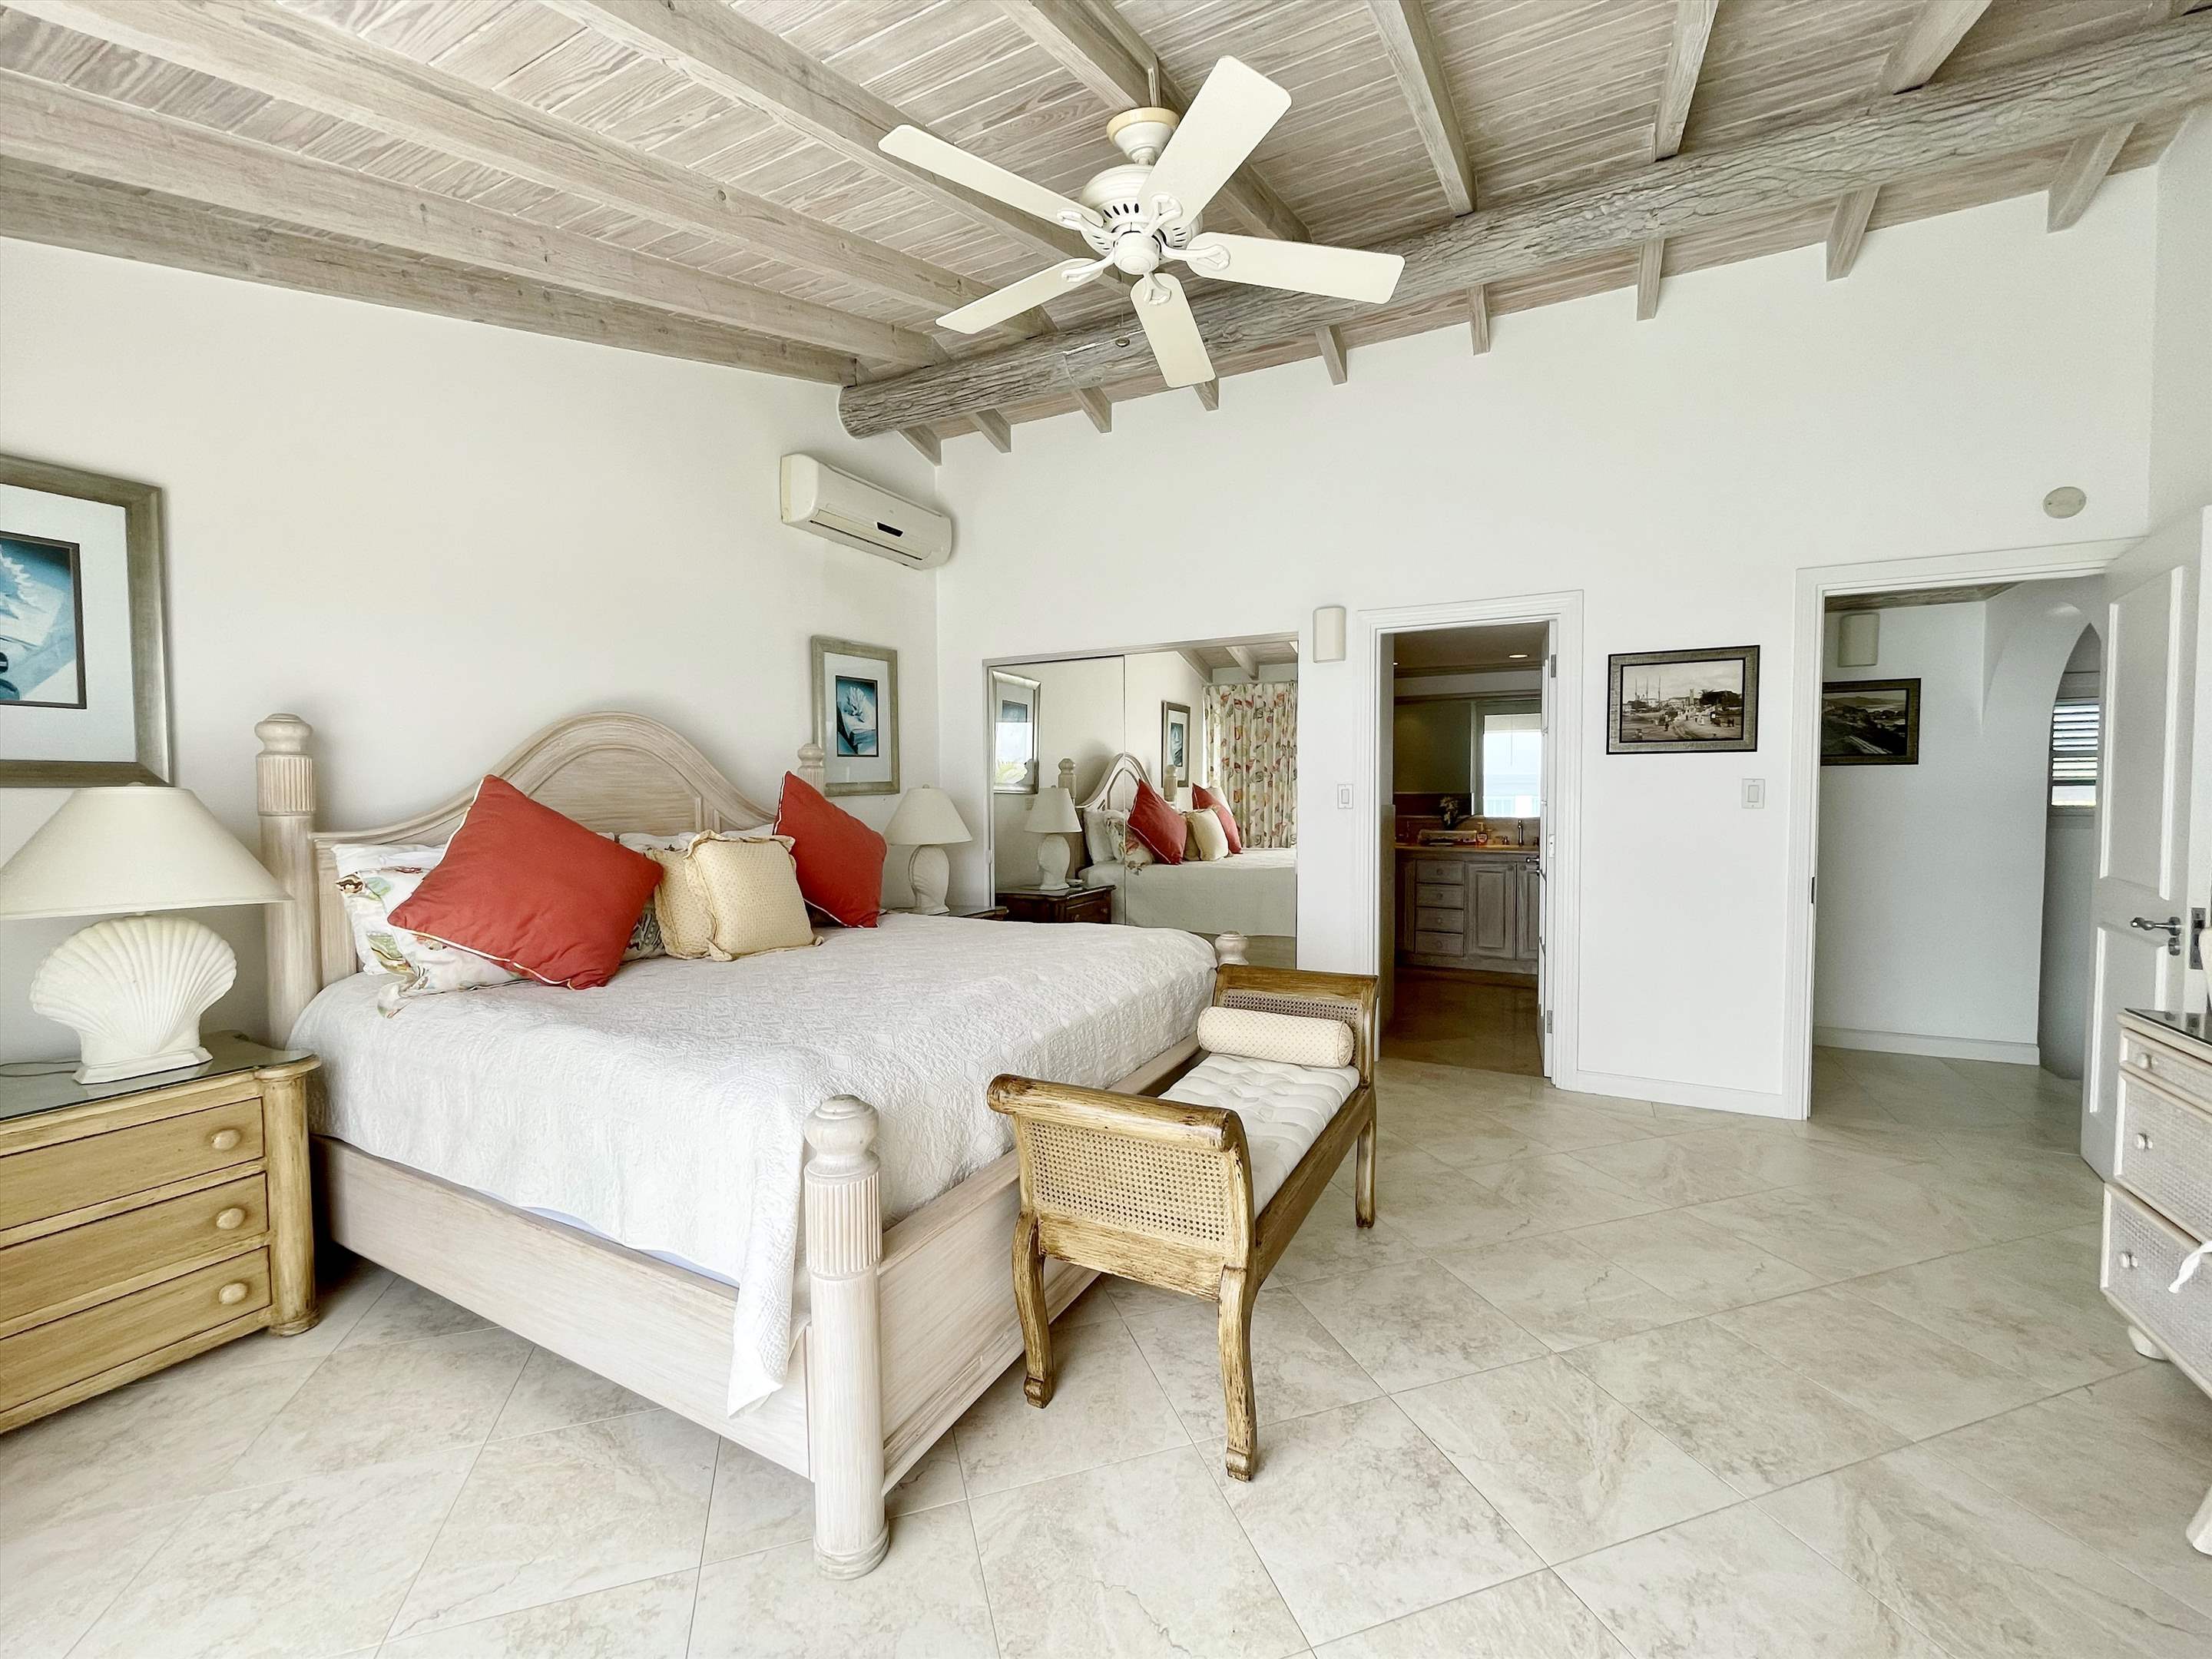 Villas on the Beach 403, 3 bedroom, 3 bedroom apartment in St. James & West Coast, Barbados Photo #19